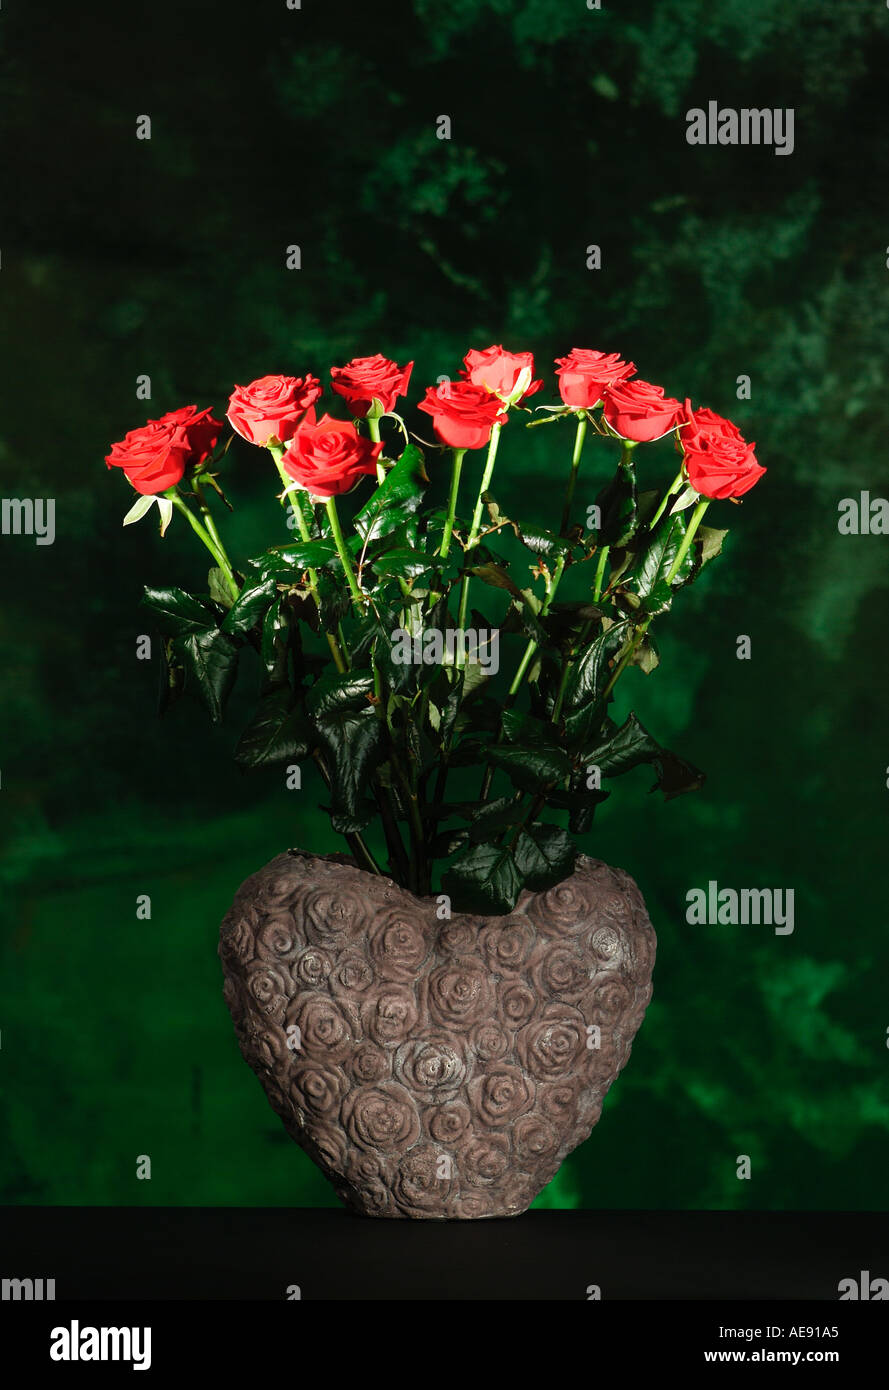 one dozen red roses in heart shaped vase Stock Photo